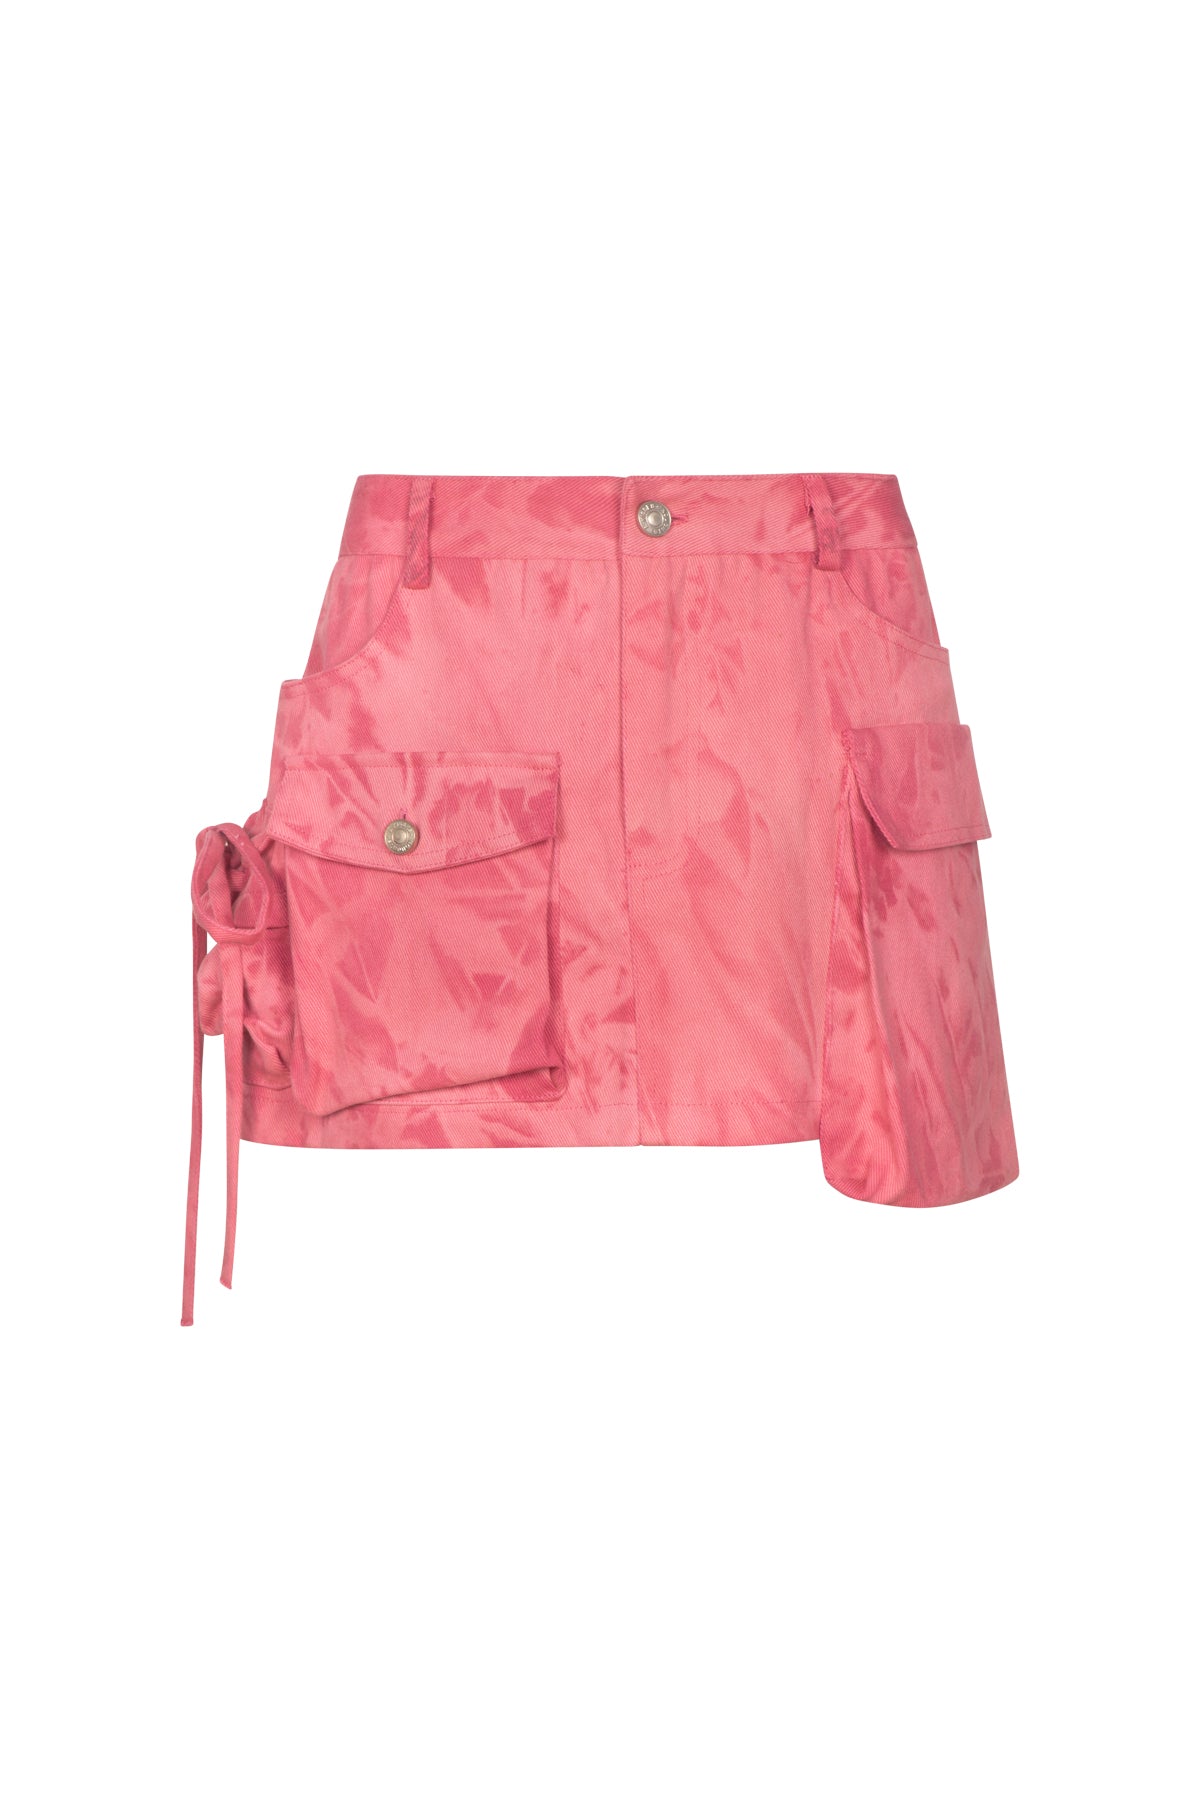 STASSIE Pink Acid Wash Cargo Mini Skirt